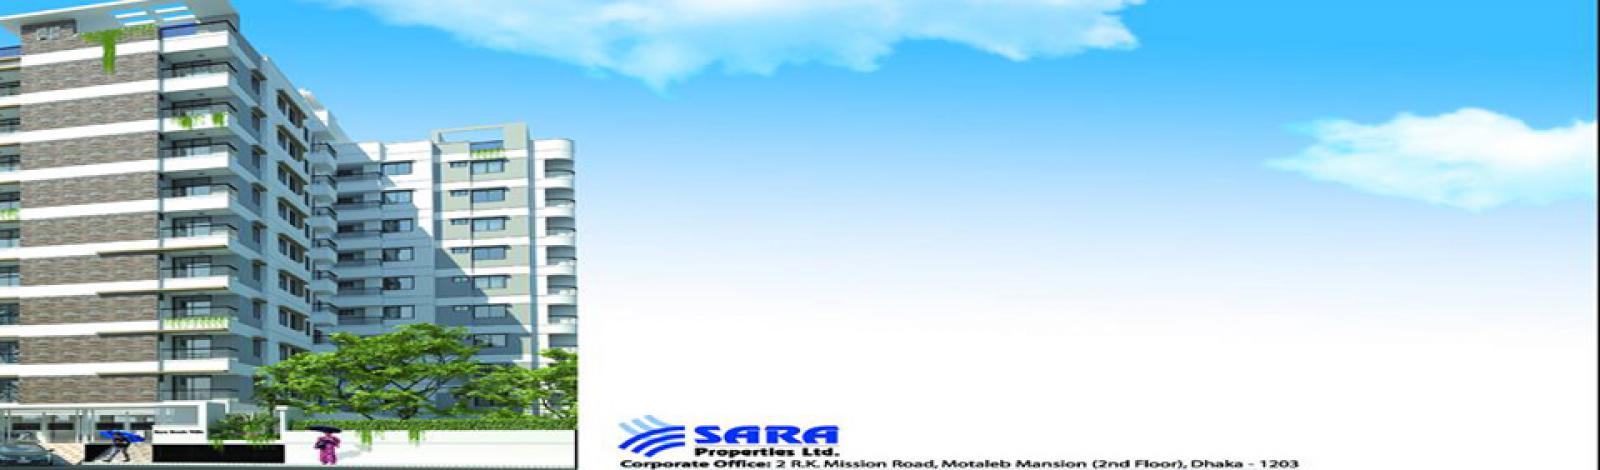 Sara Properties Limited banner